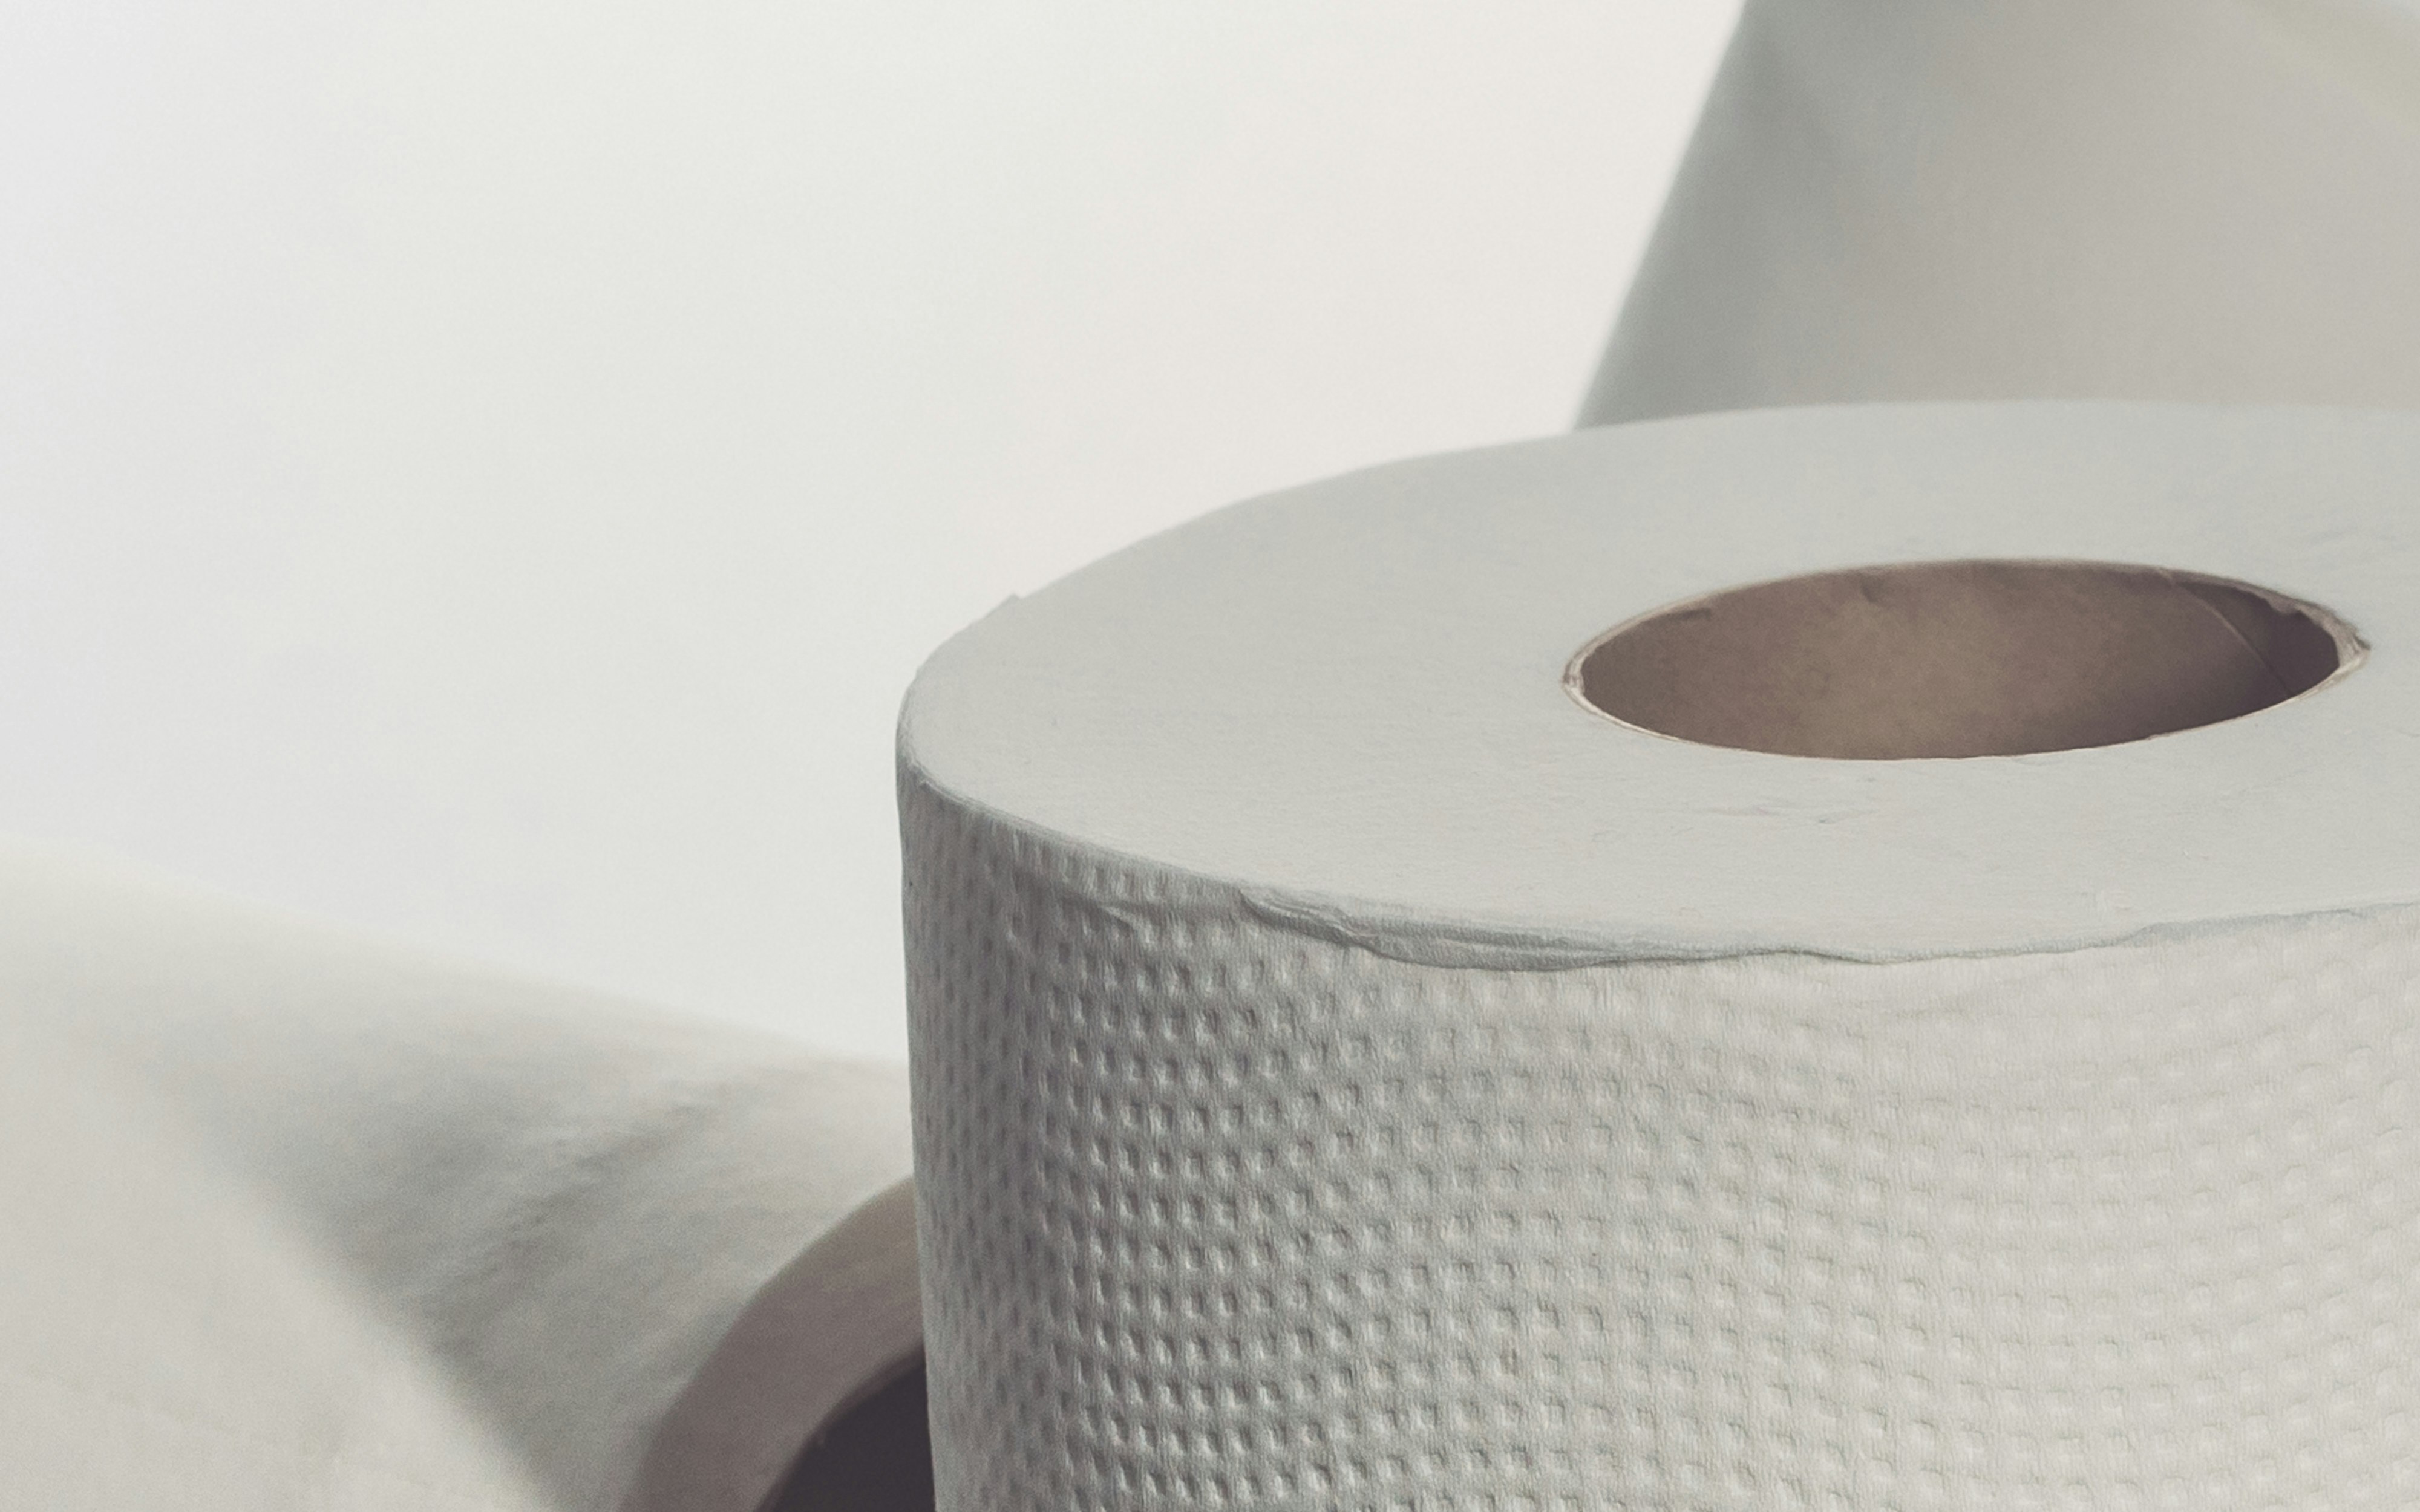 Texture of toilet paper